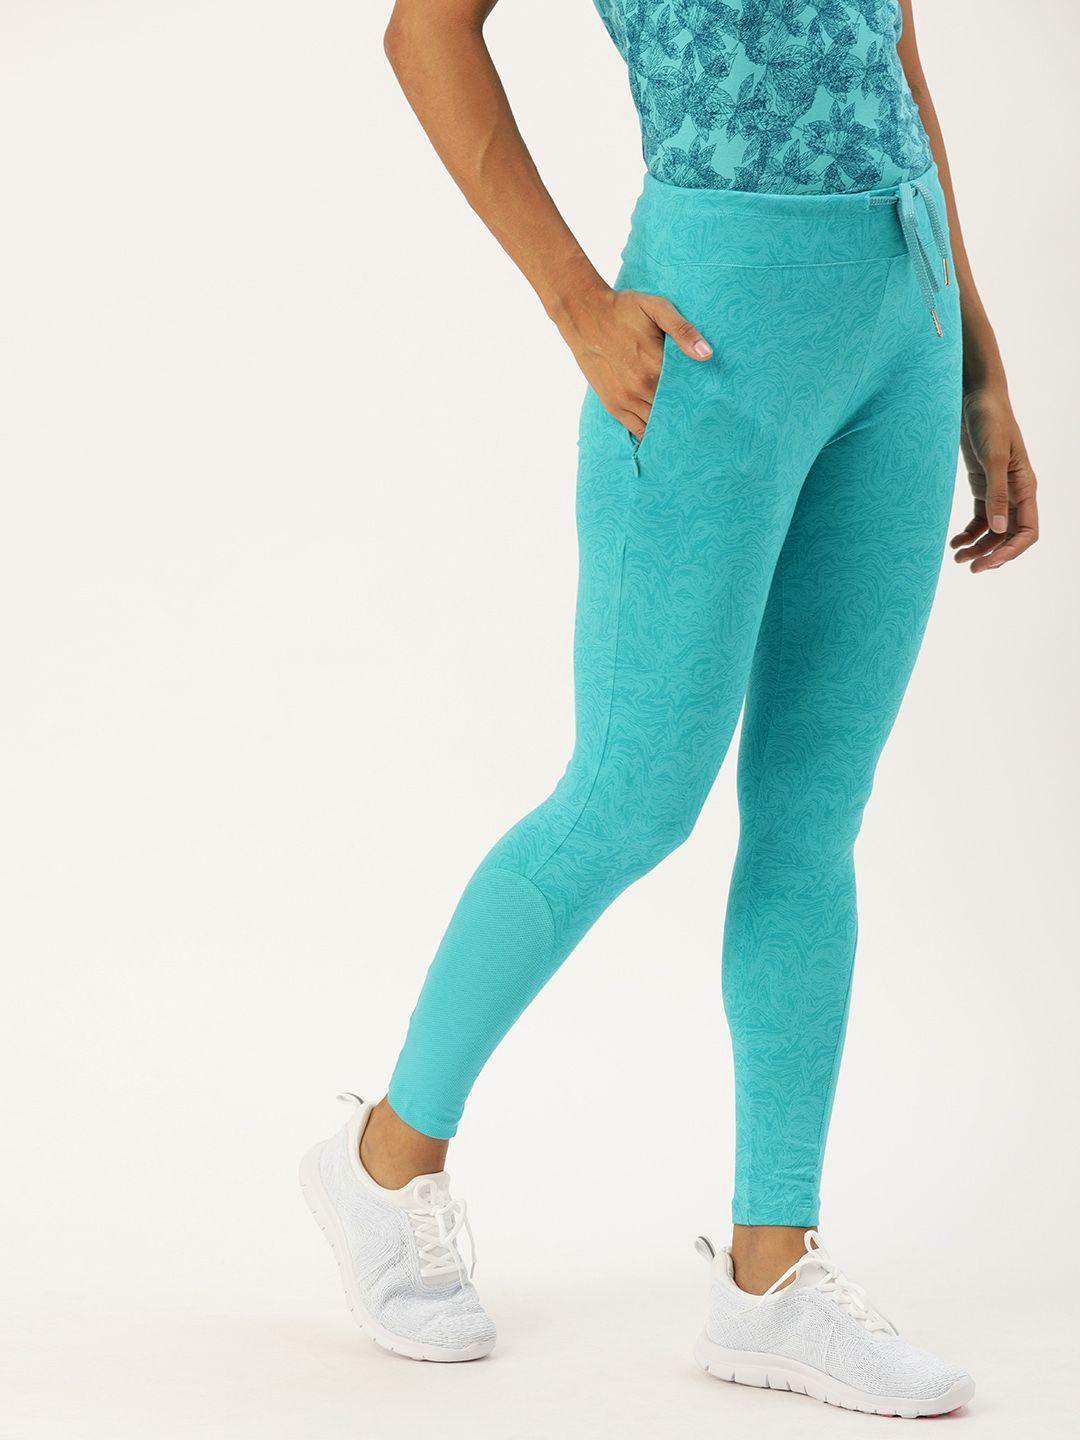 jockey-woman's-teal-blue-solid-yoga-pants